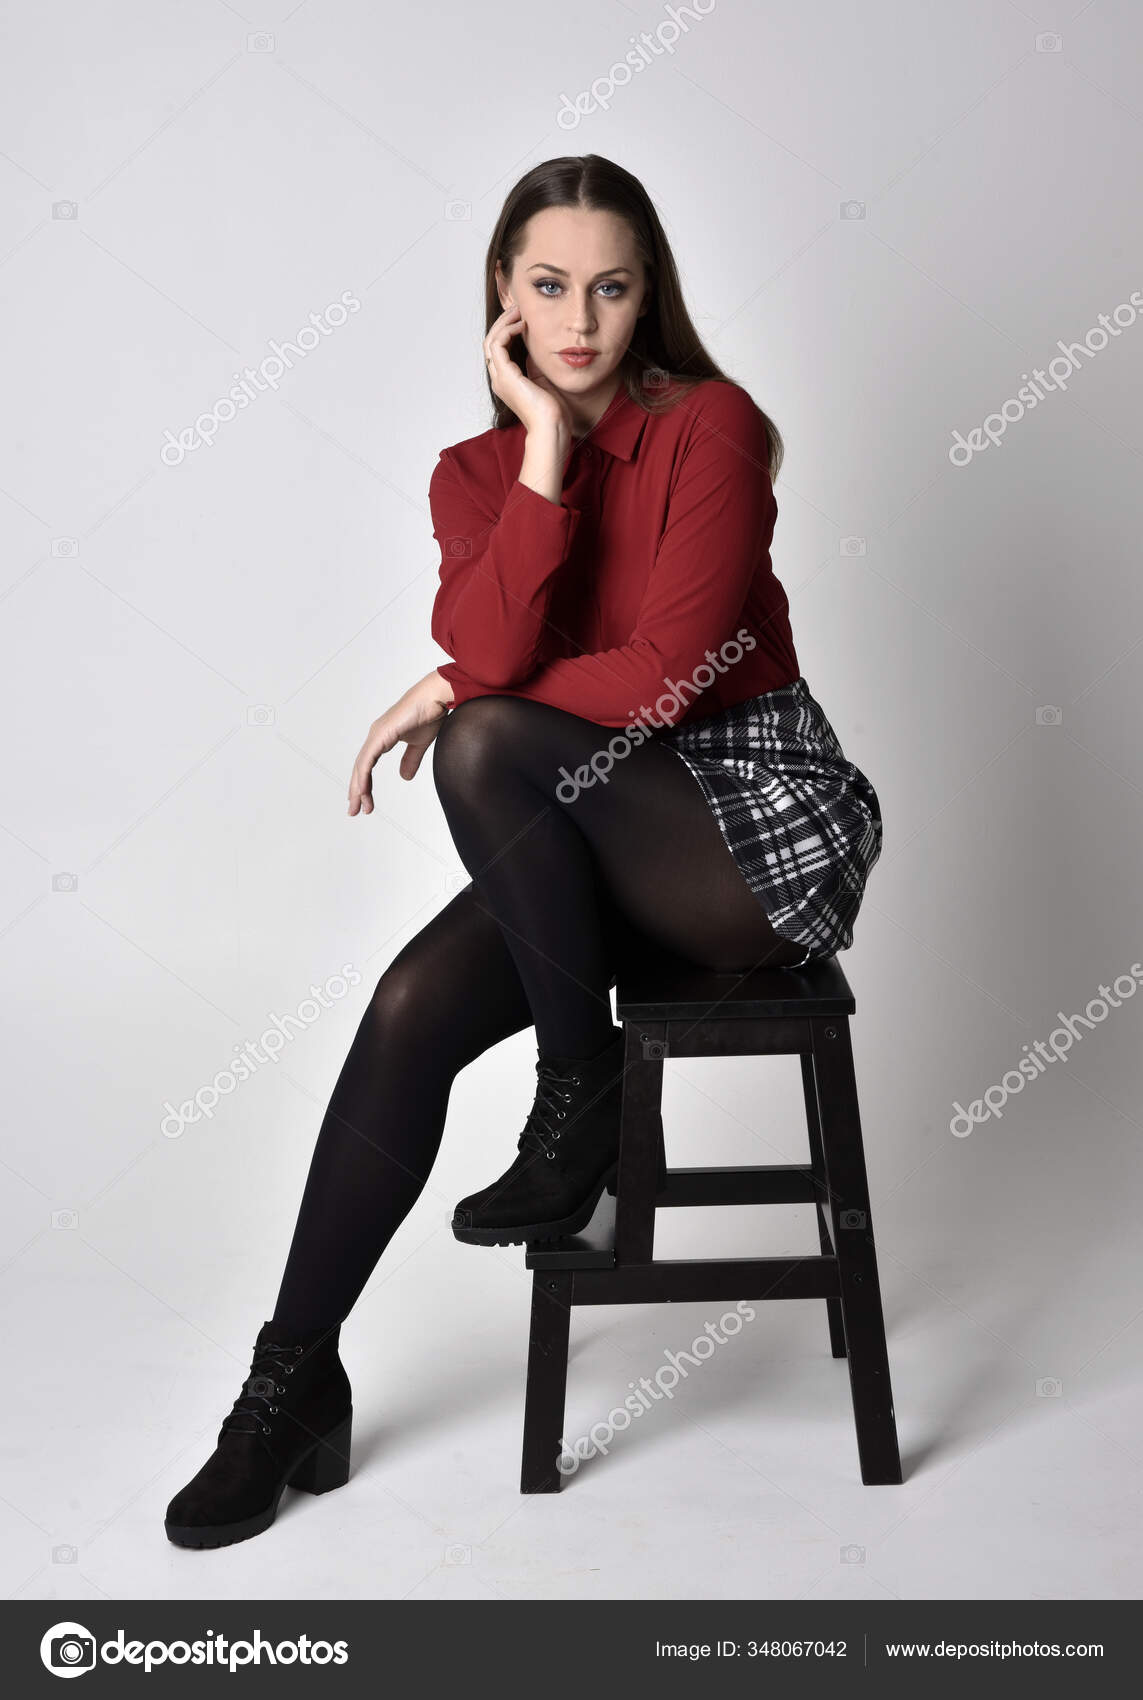 full length portrait of a pretty brunette girl wearing a red shirt